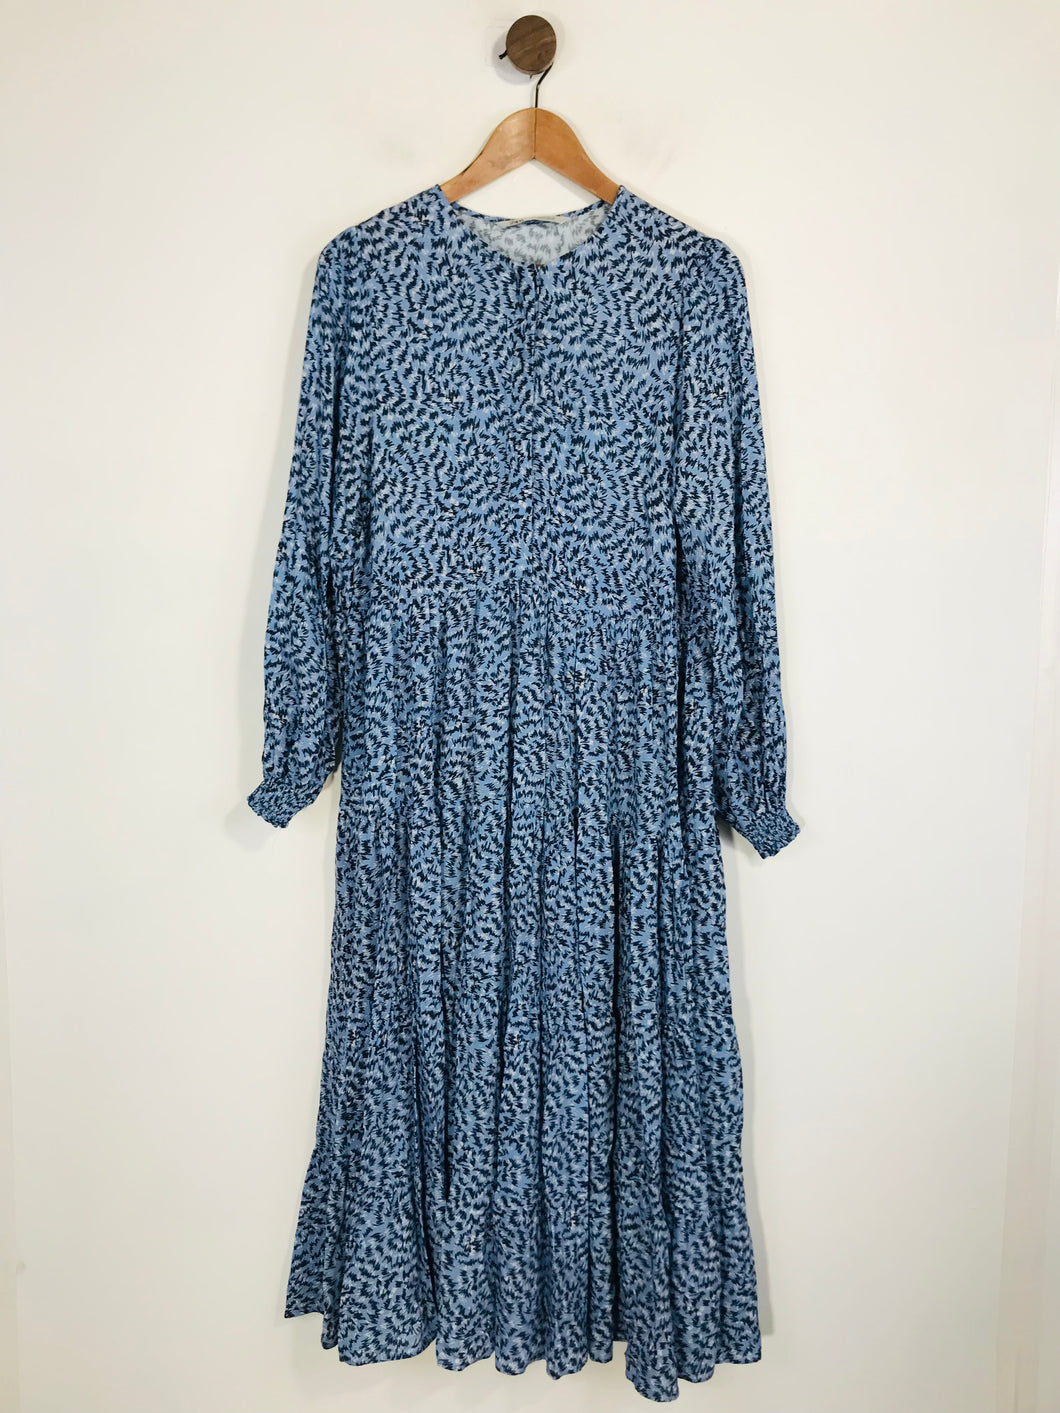 Zara Women's Long Sleeve Maxi Dress | M UK10-12 | Blue